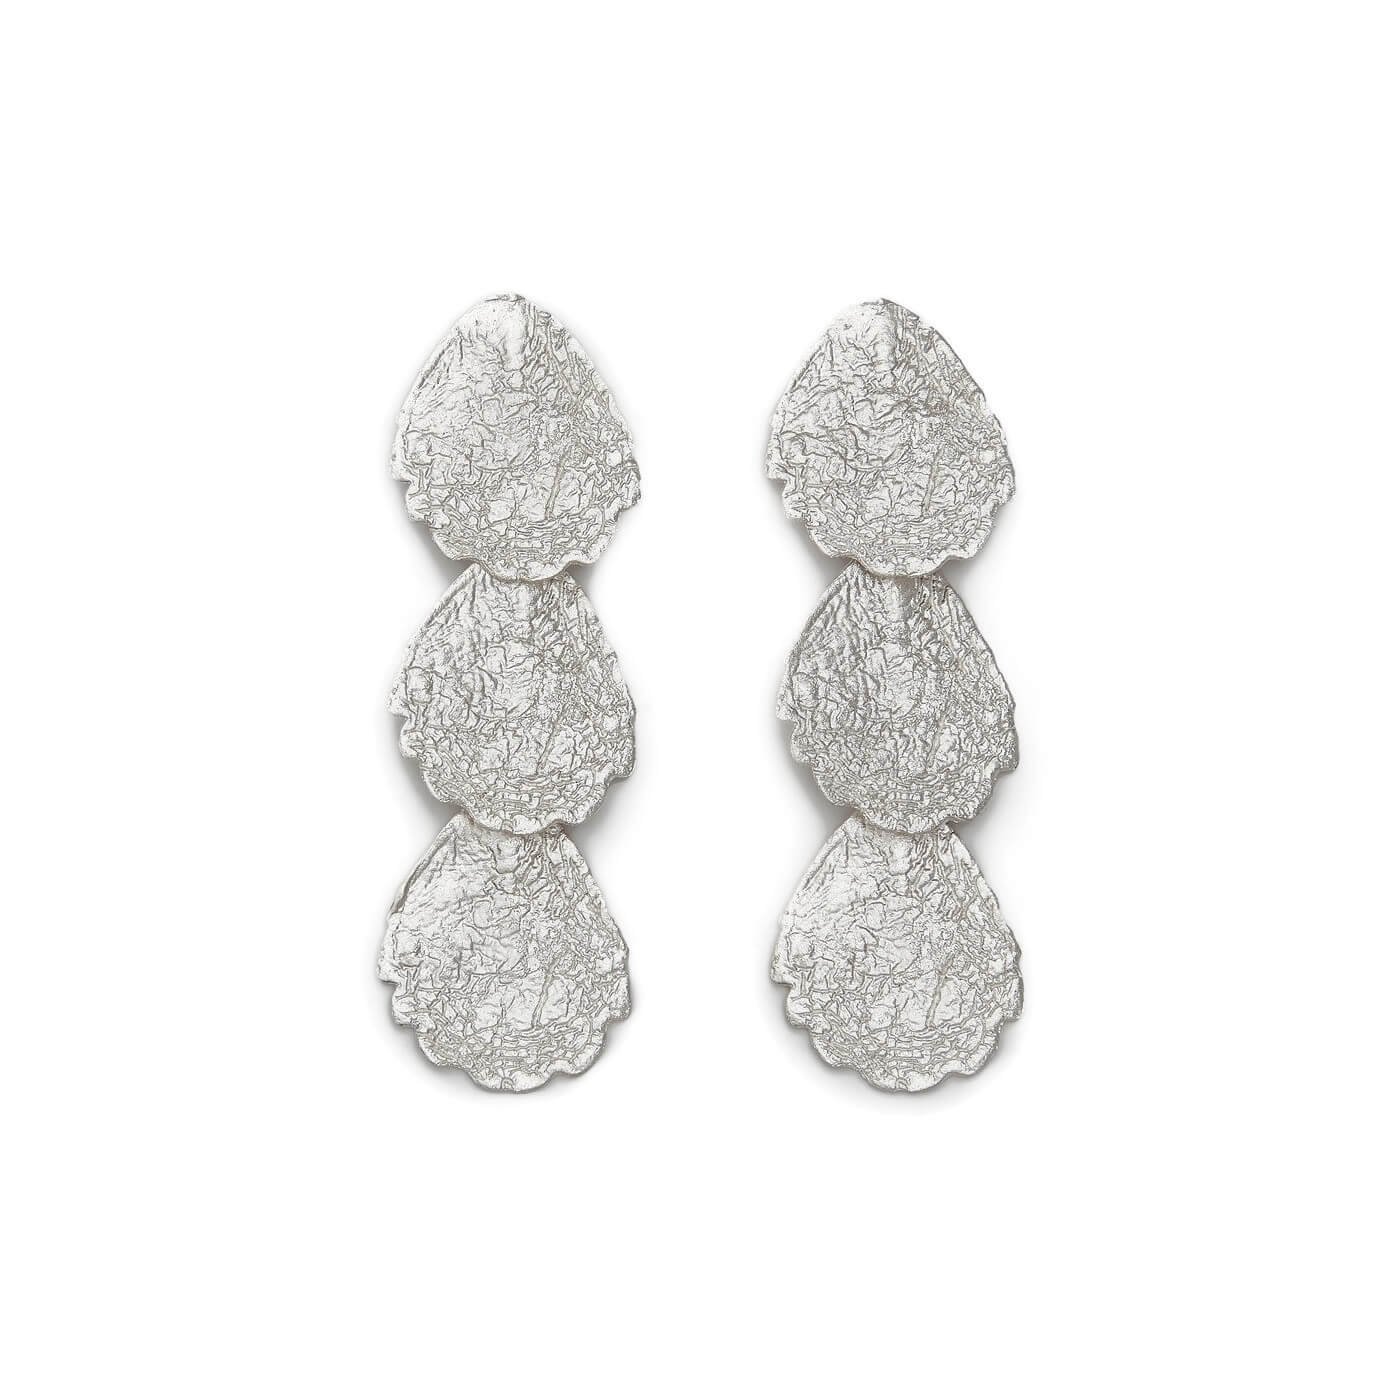 Lisbon: Juliana Bezerra “Laurissilva” earrings, $160.63 